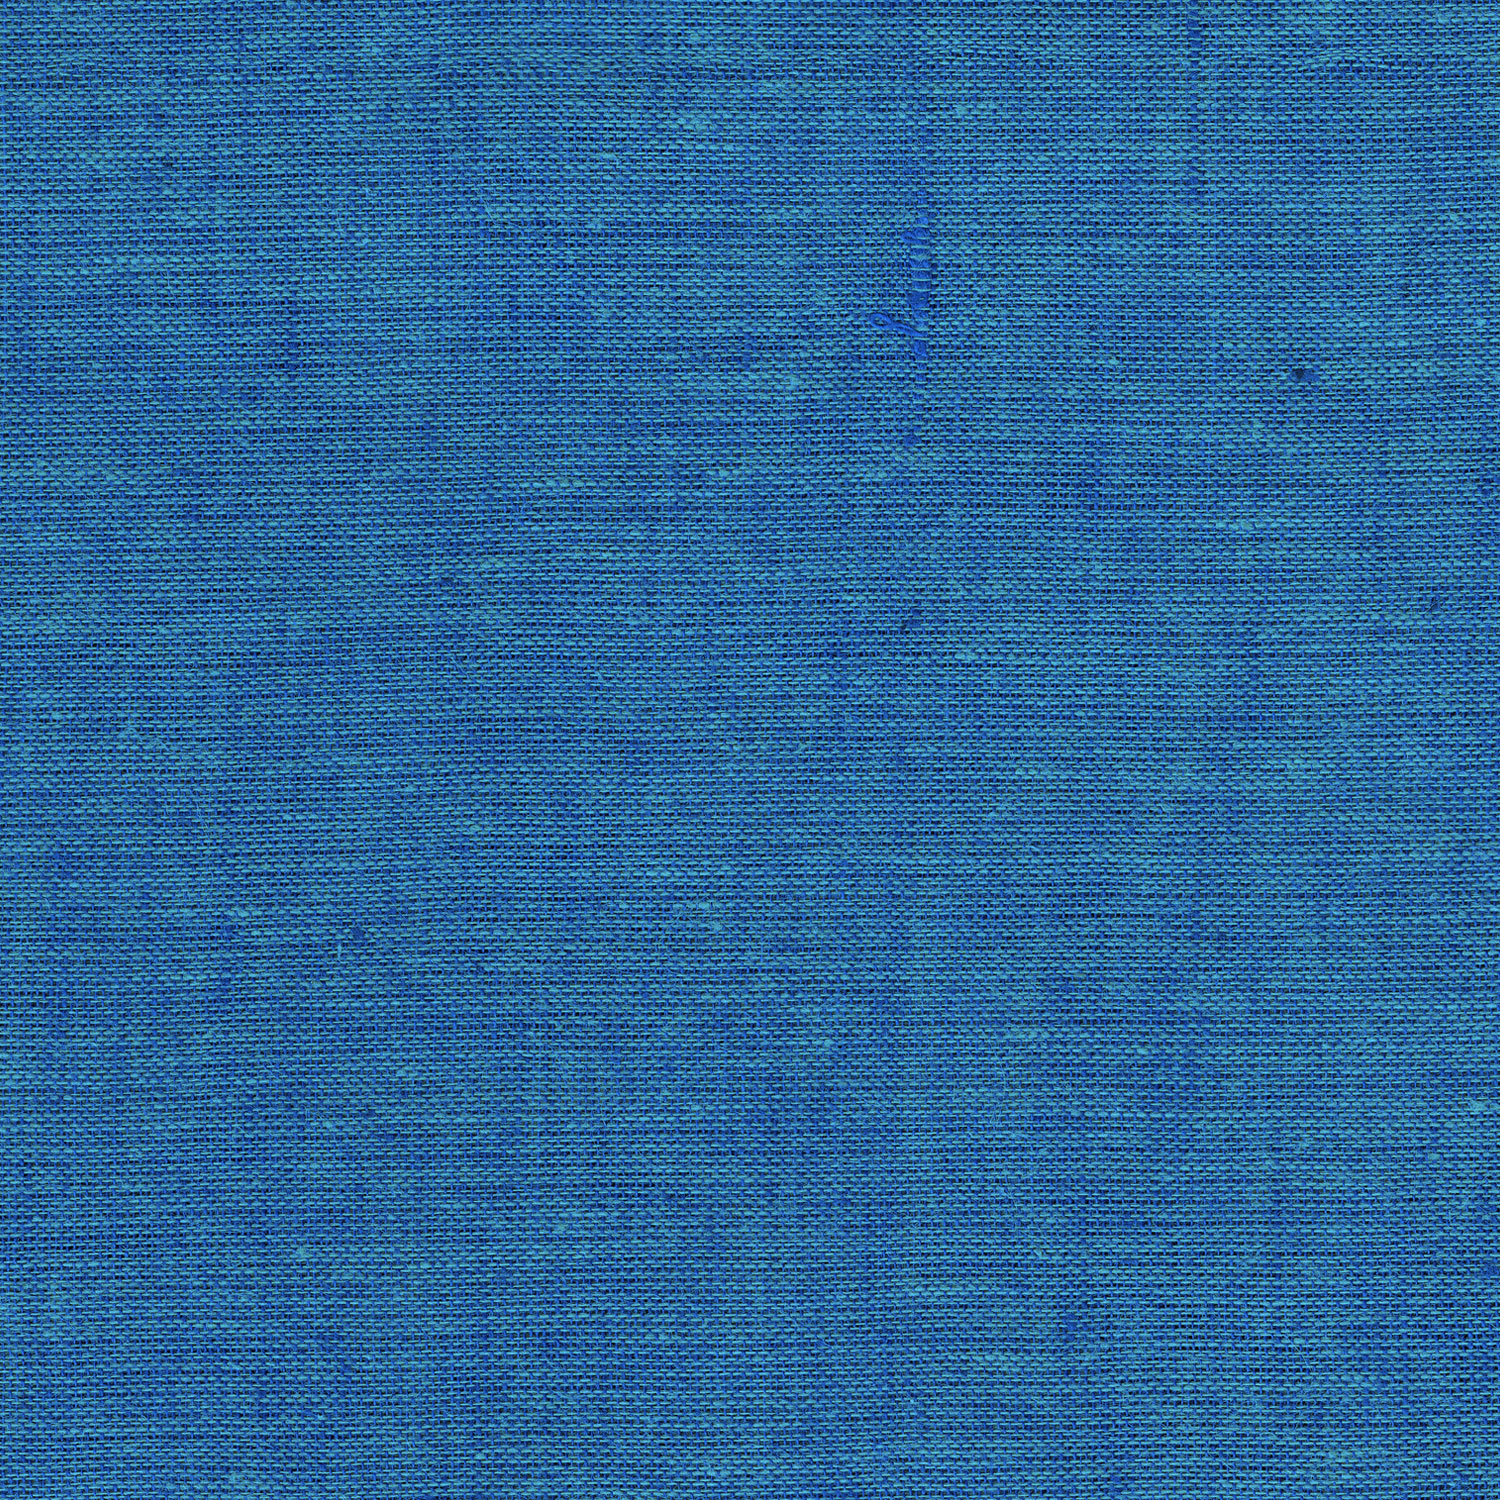 papier peint bleu denim,bleu,aqua,turquoise,bleu cobalt,bleu électrique